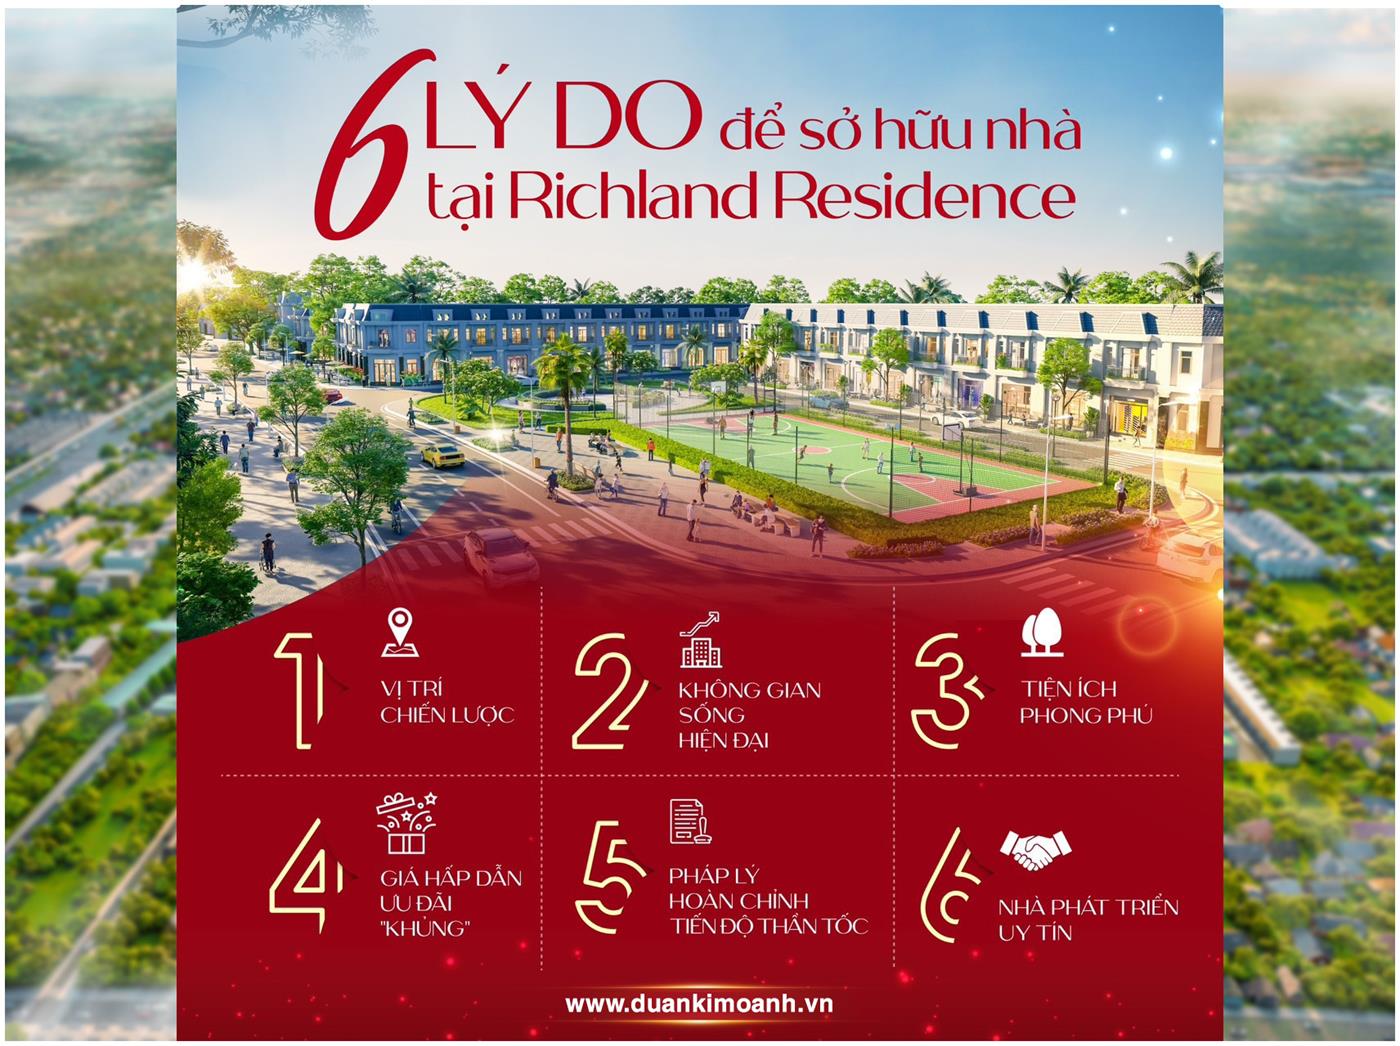 Richland Residence